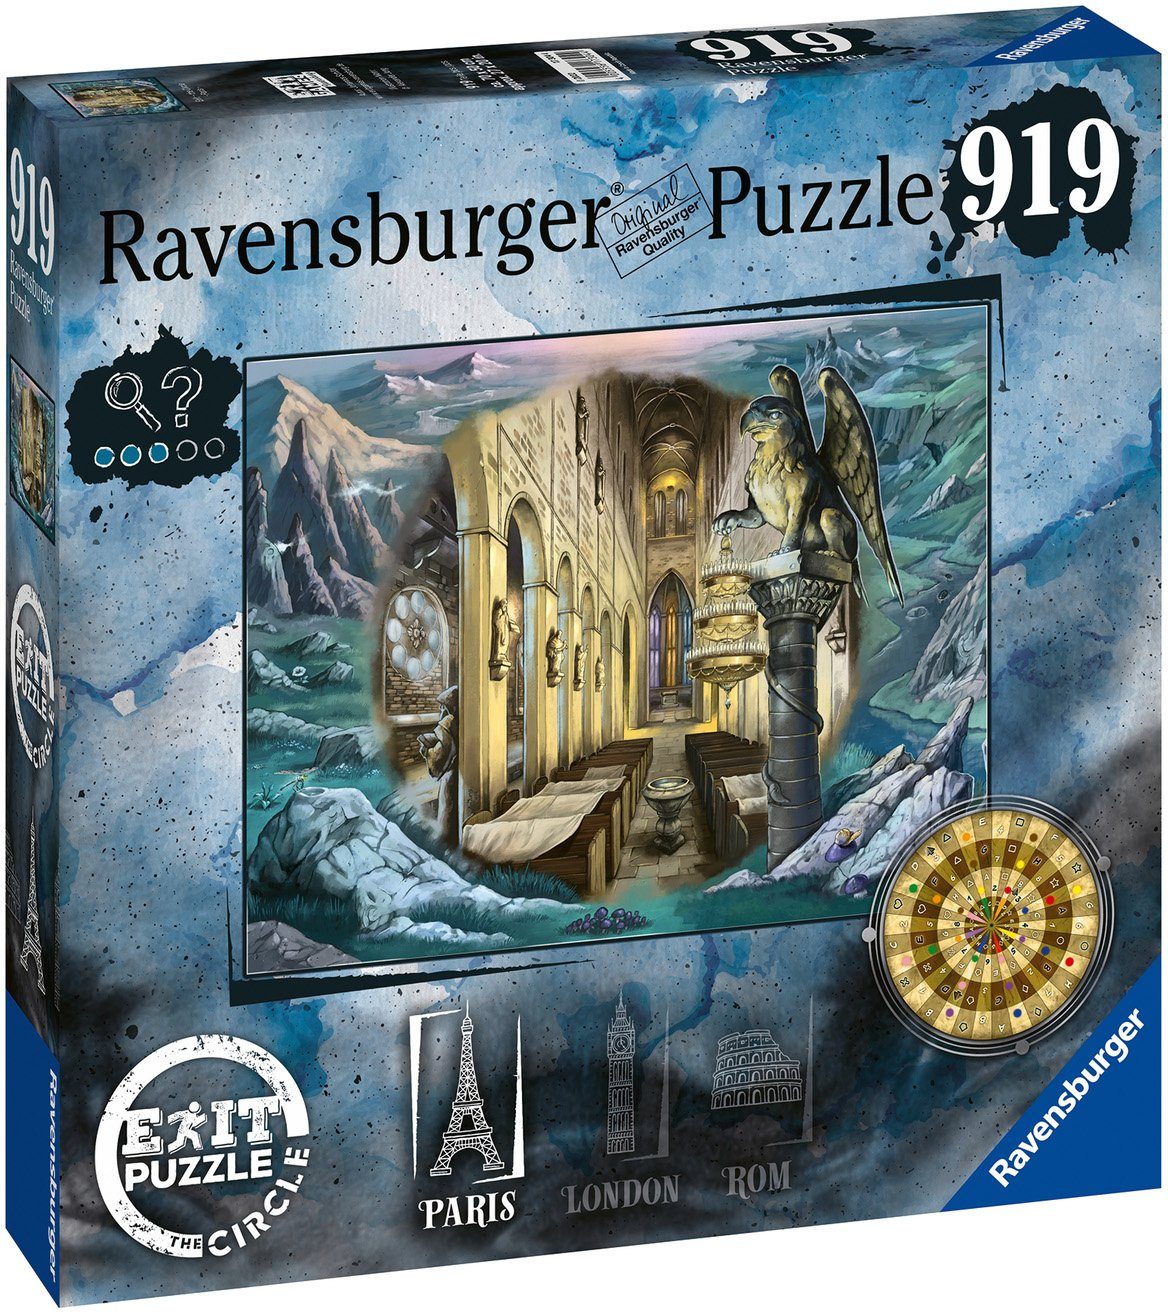 Ravensburger Puzzle Exit: the Circle weltweit - schützt - Paris, 919 Europe, Puzzleteile, in Made FSC® Wald in